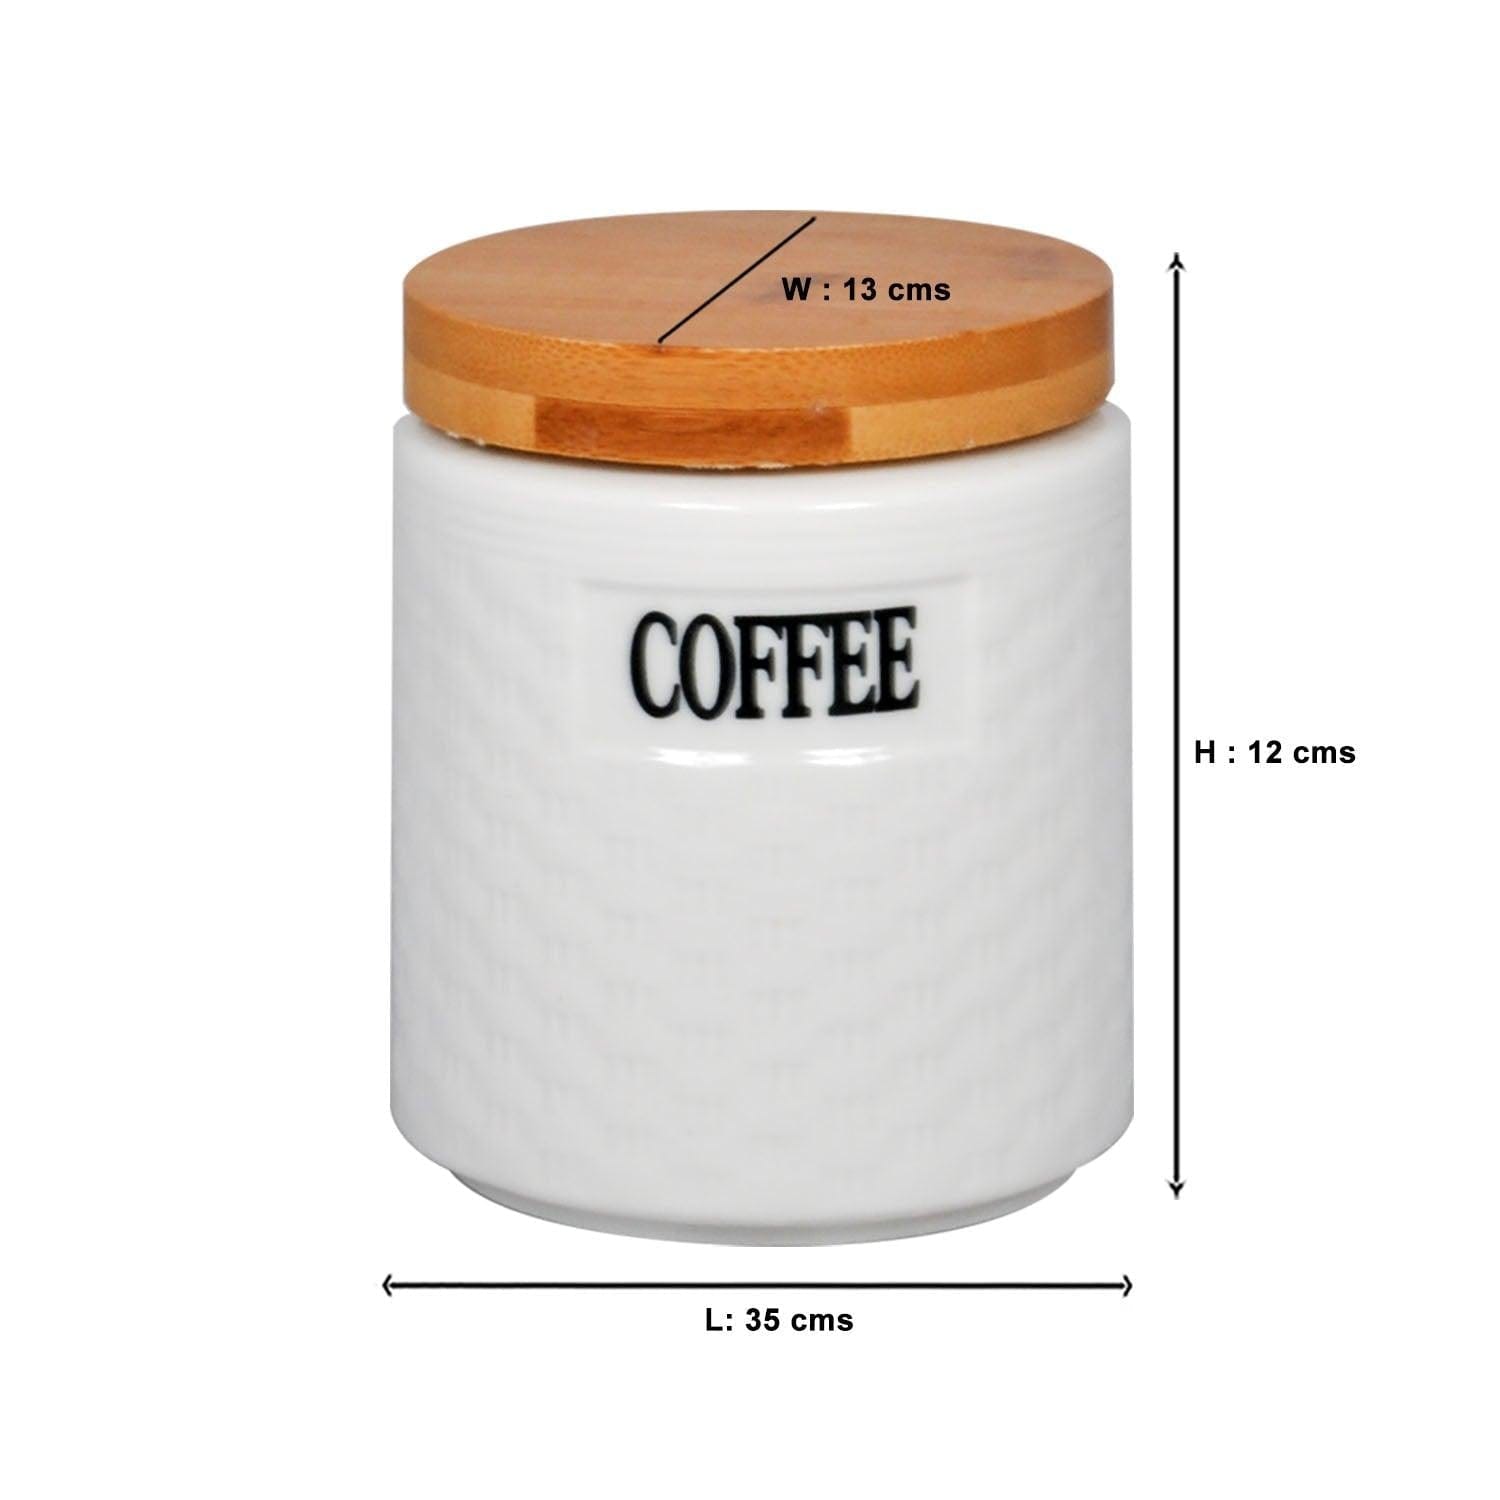 Tea, Coffee, Sugar - 3 White Ceramic Checks Jars with Lid on Wooden Tray Set